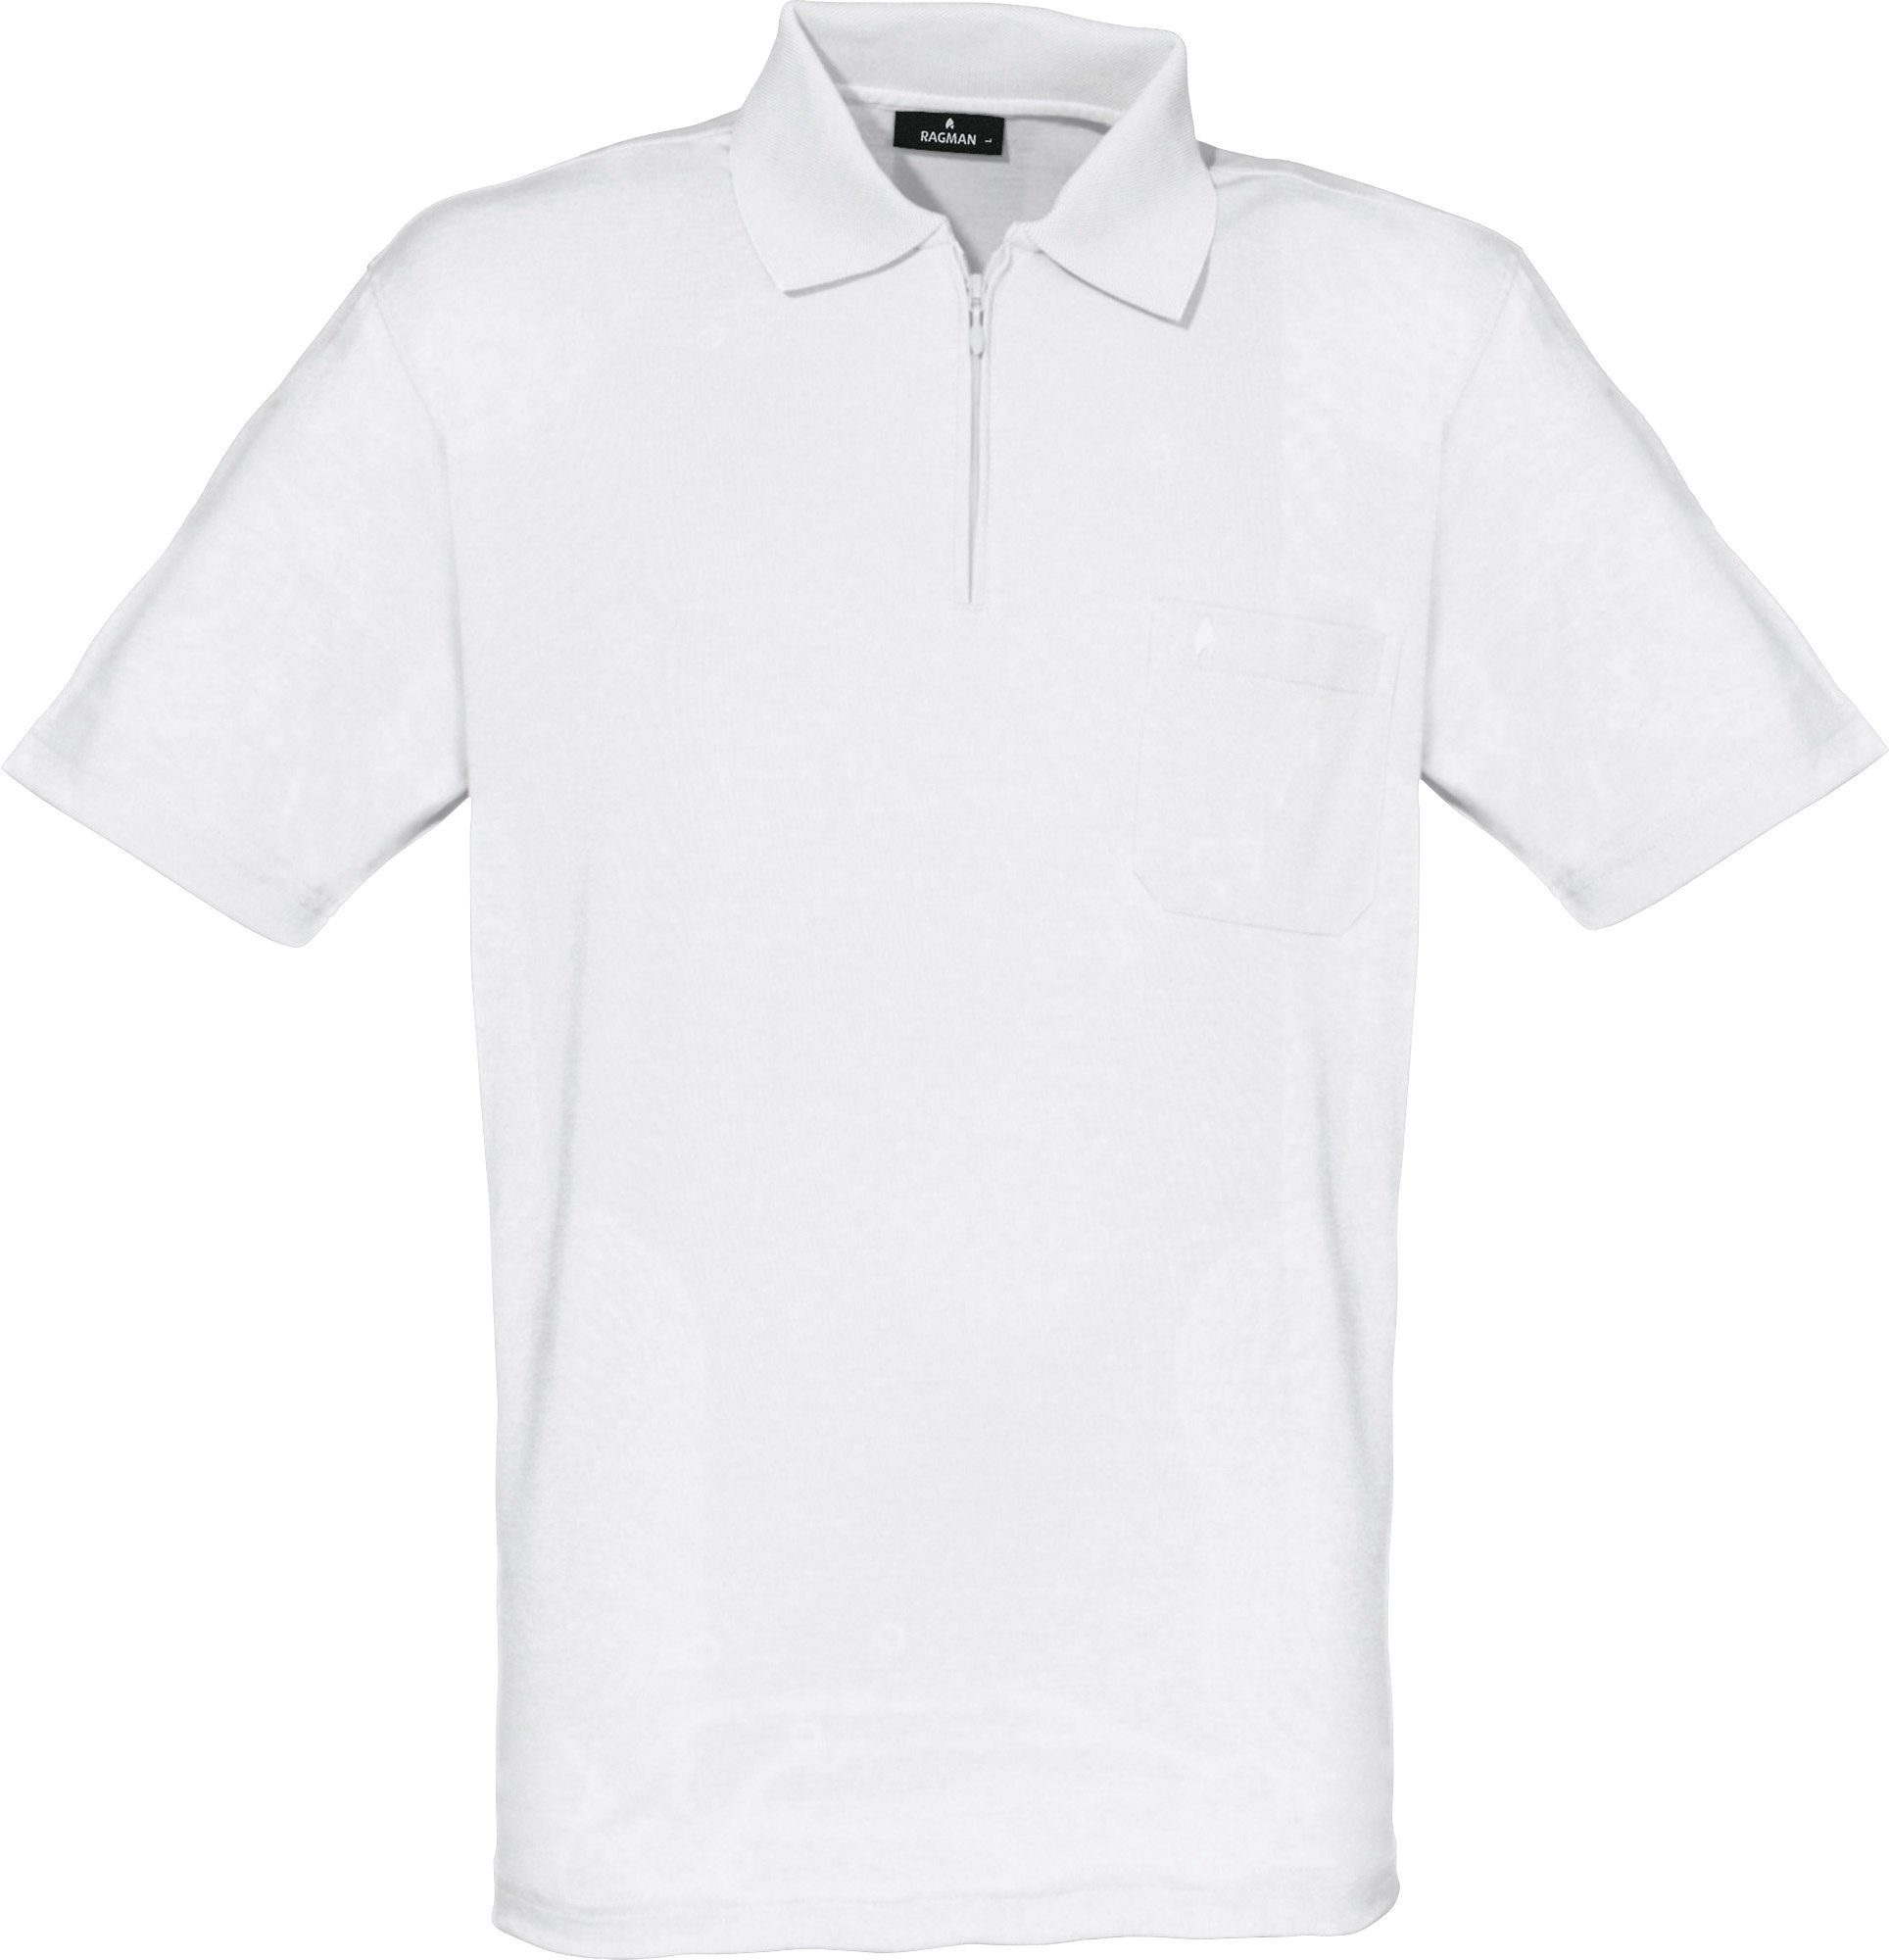 RAGMAN Sweatshirt Herren-Poloshirt Uni weiß